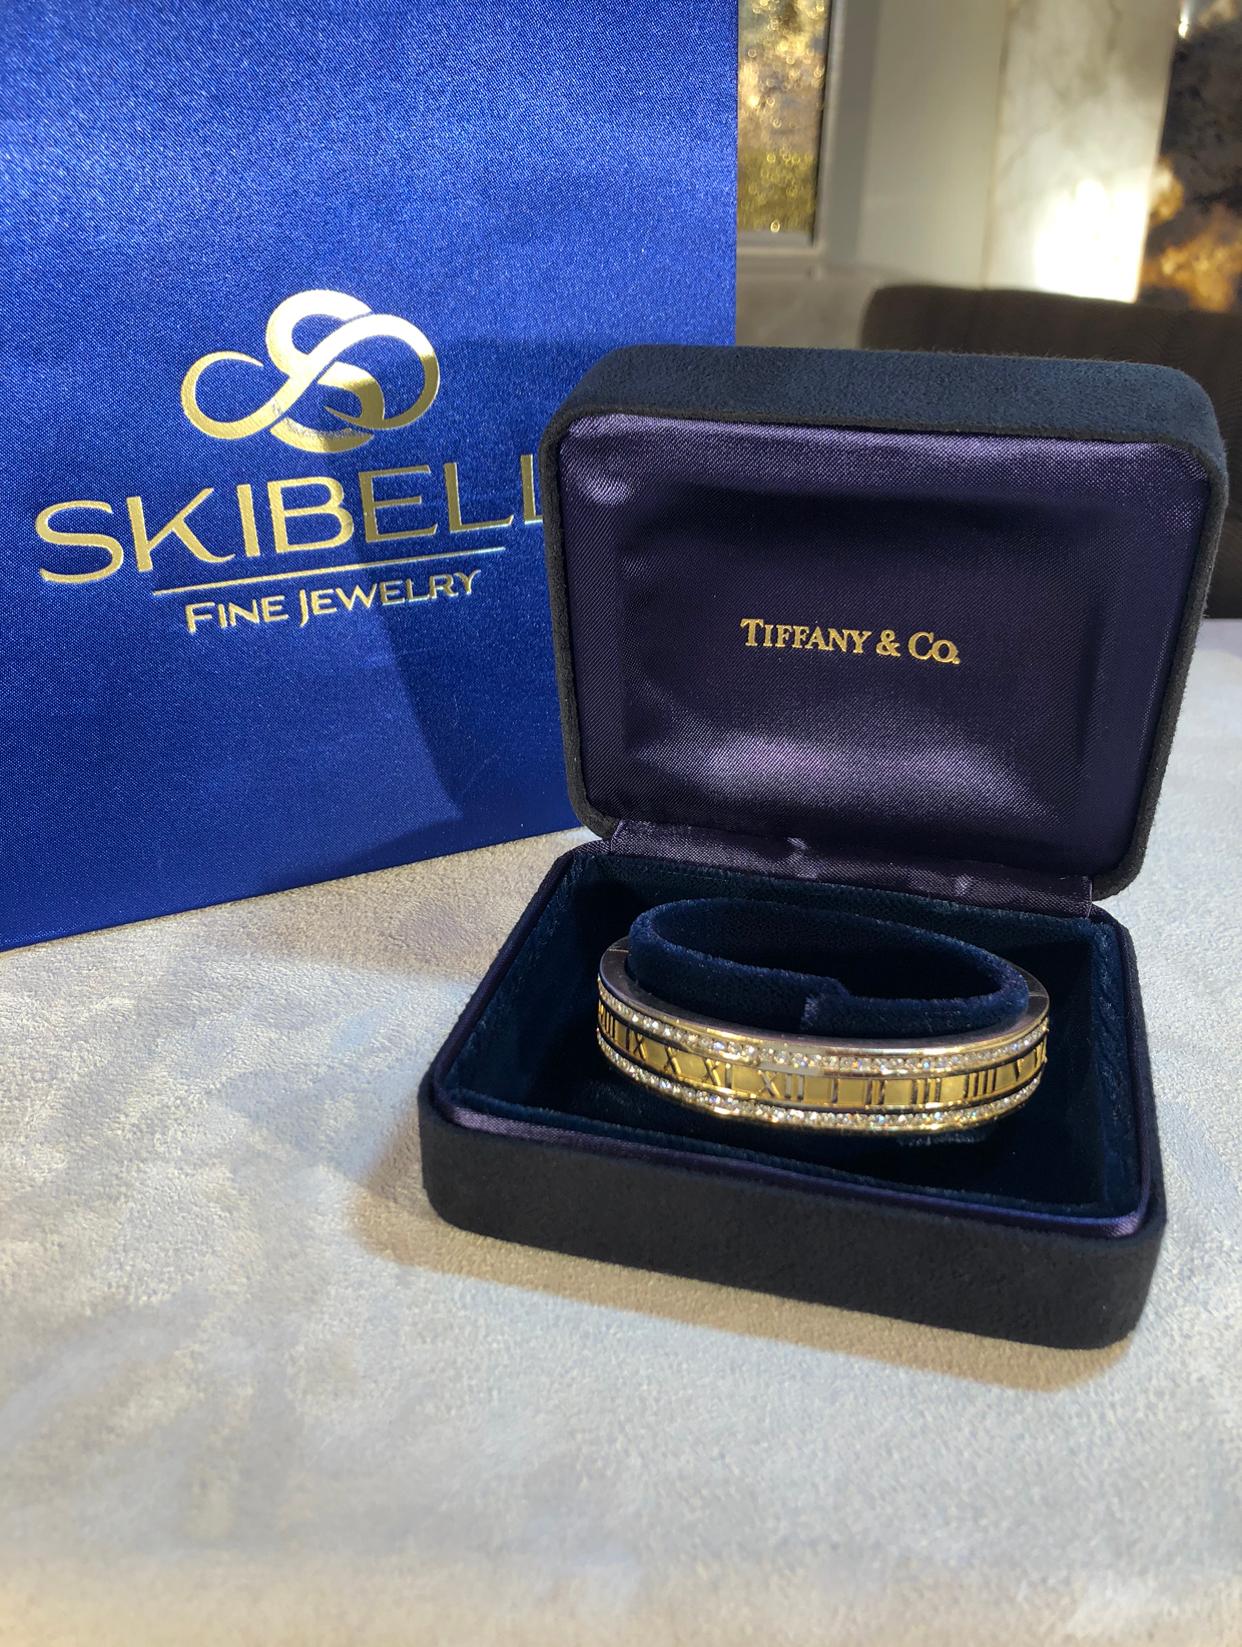 Tiffany & Co. Diamond Atlas Bracelet in 18K Yellow Gold. The bracelet features 3.50ctw of brilliant round diamonds. The bracelet is 1/2